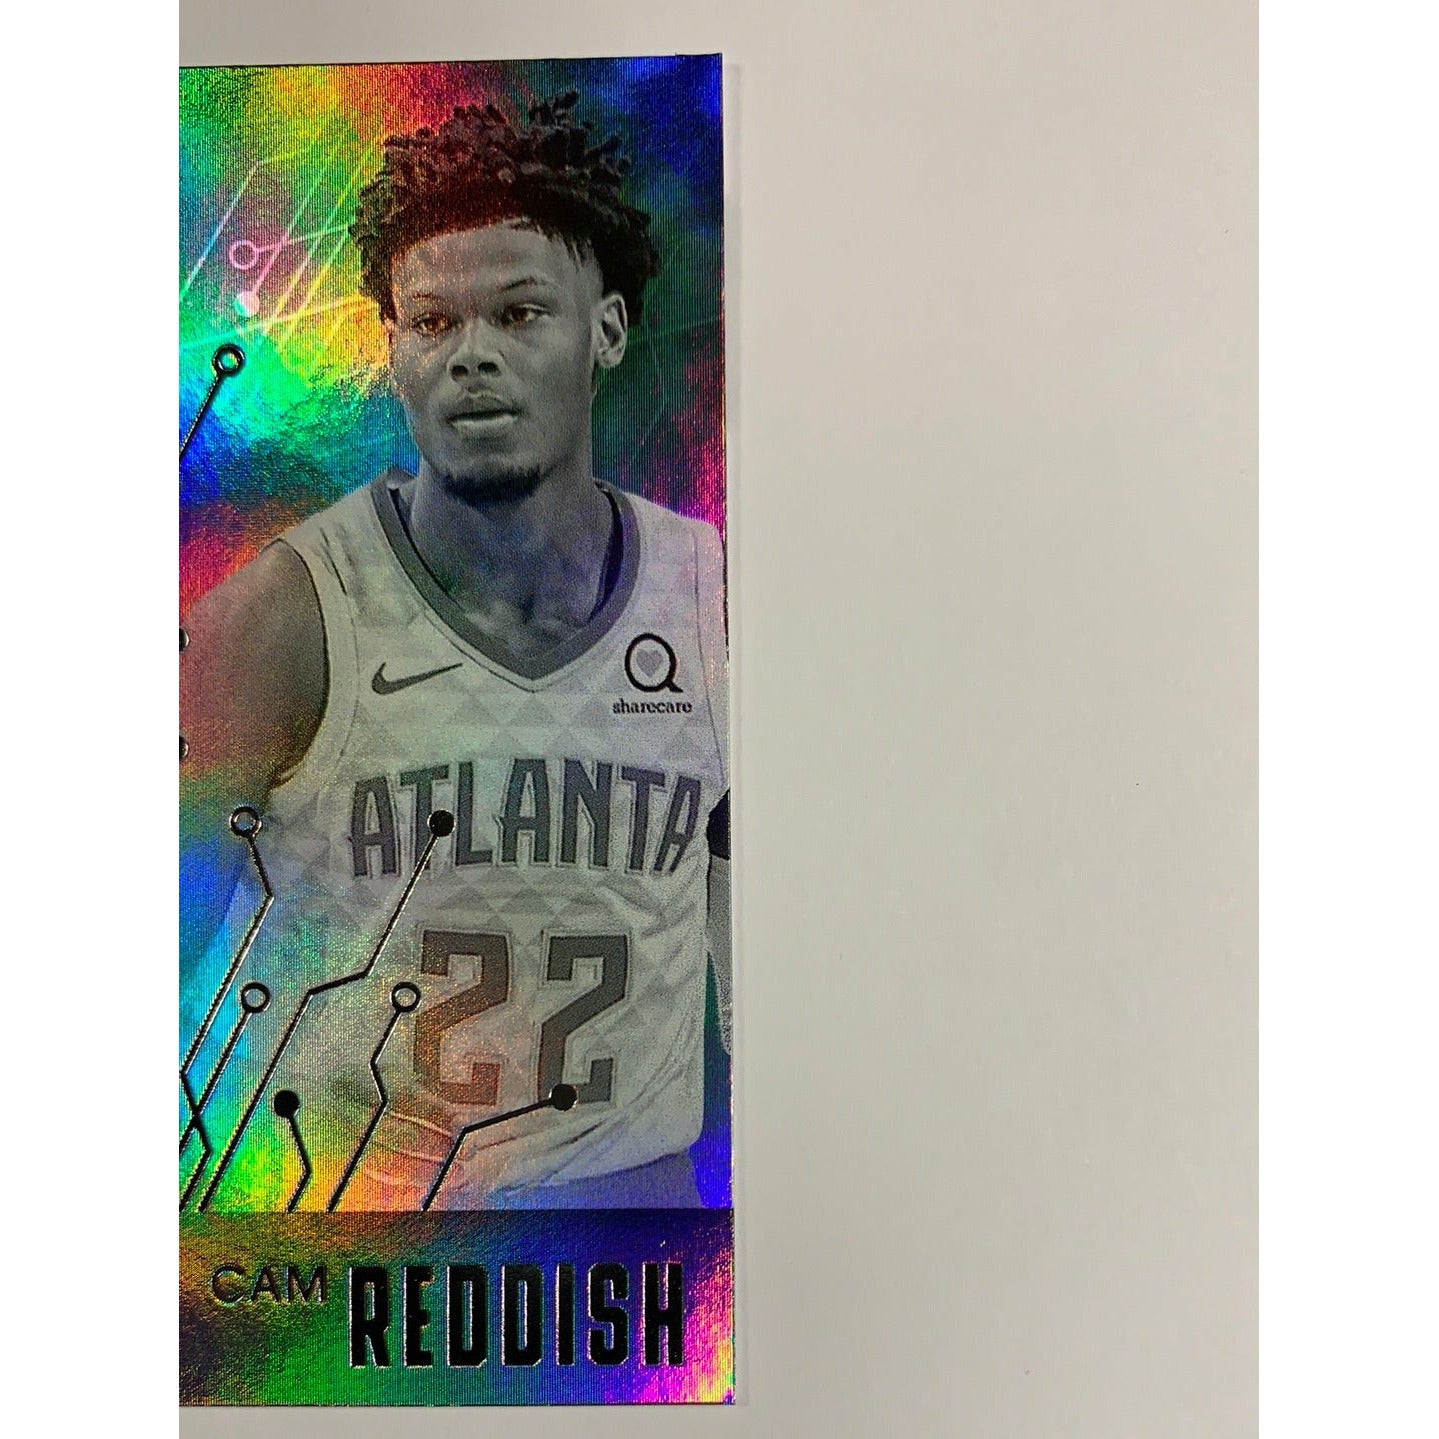 2019-20 Chronicles Essentials Cam Reddish Rookie Card